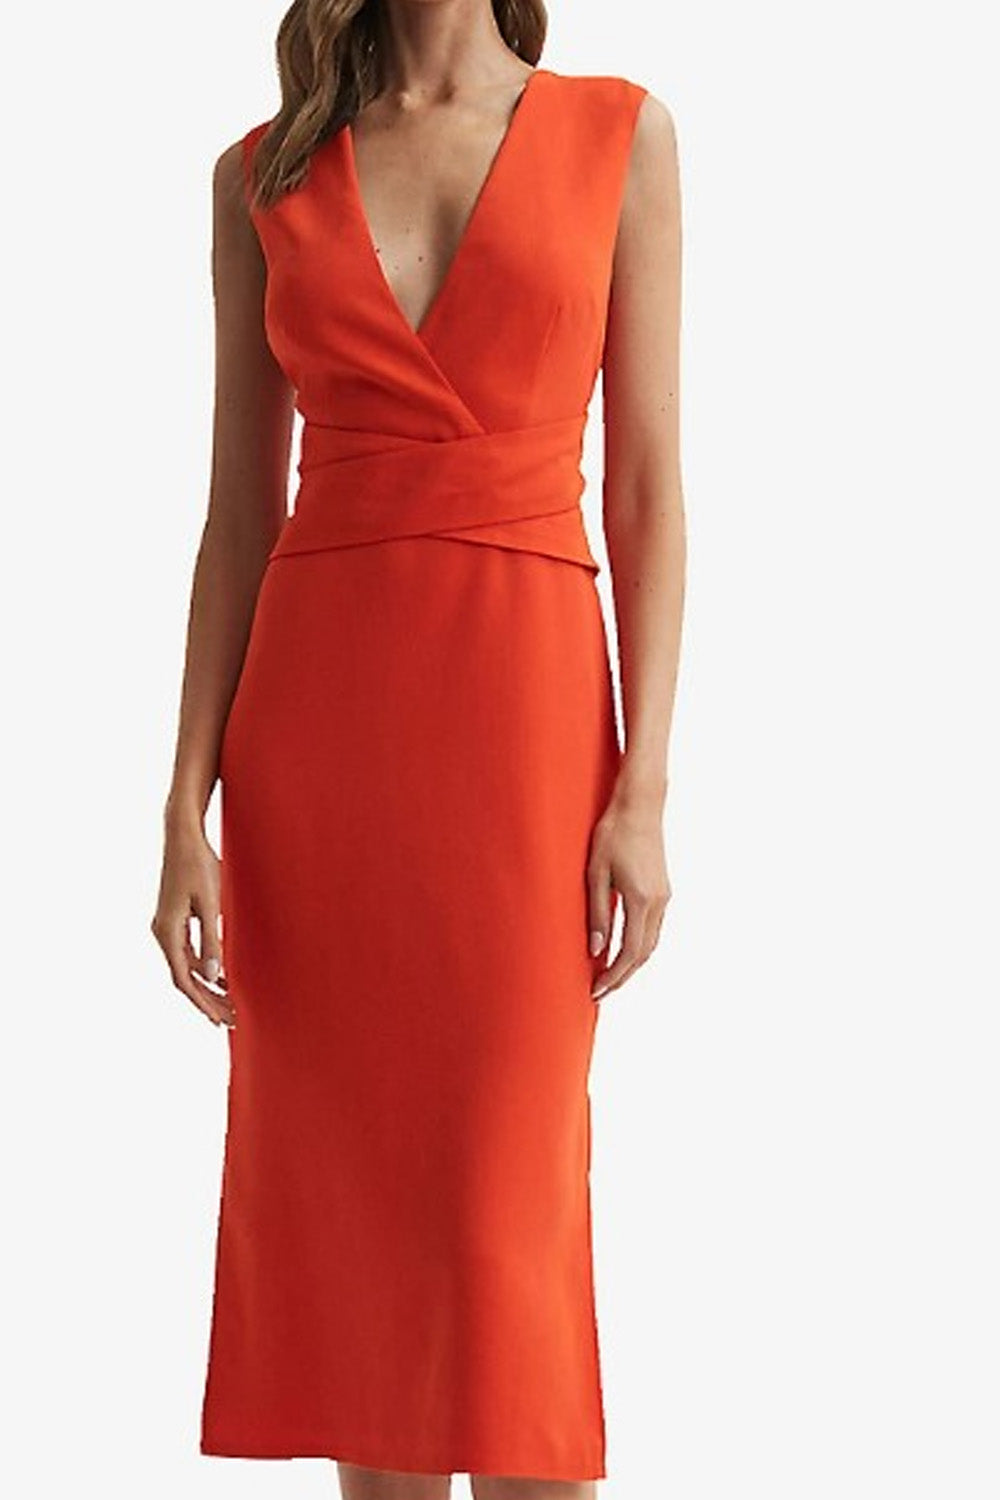 Labyrinth Orange Dress